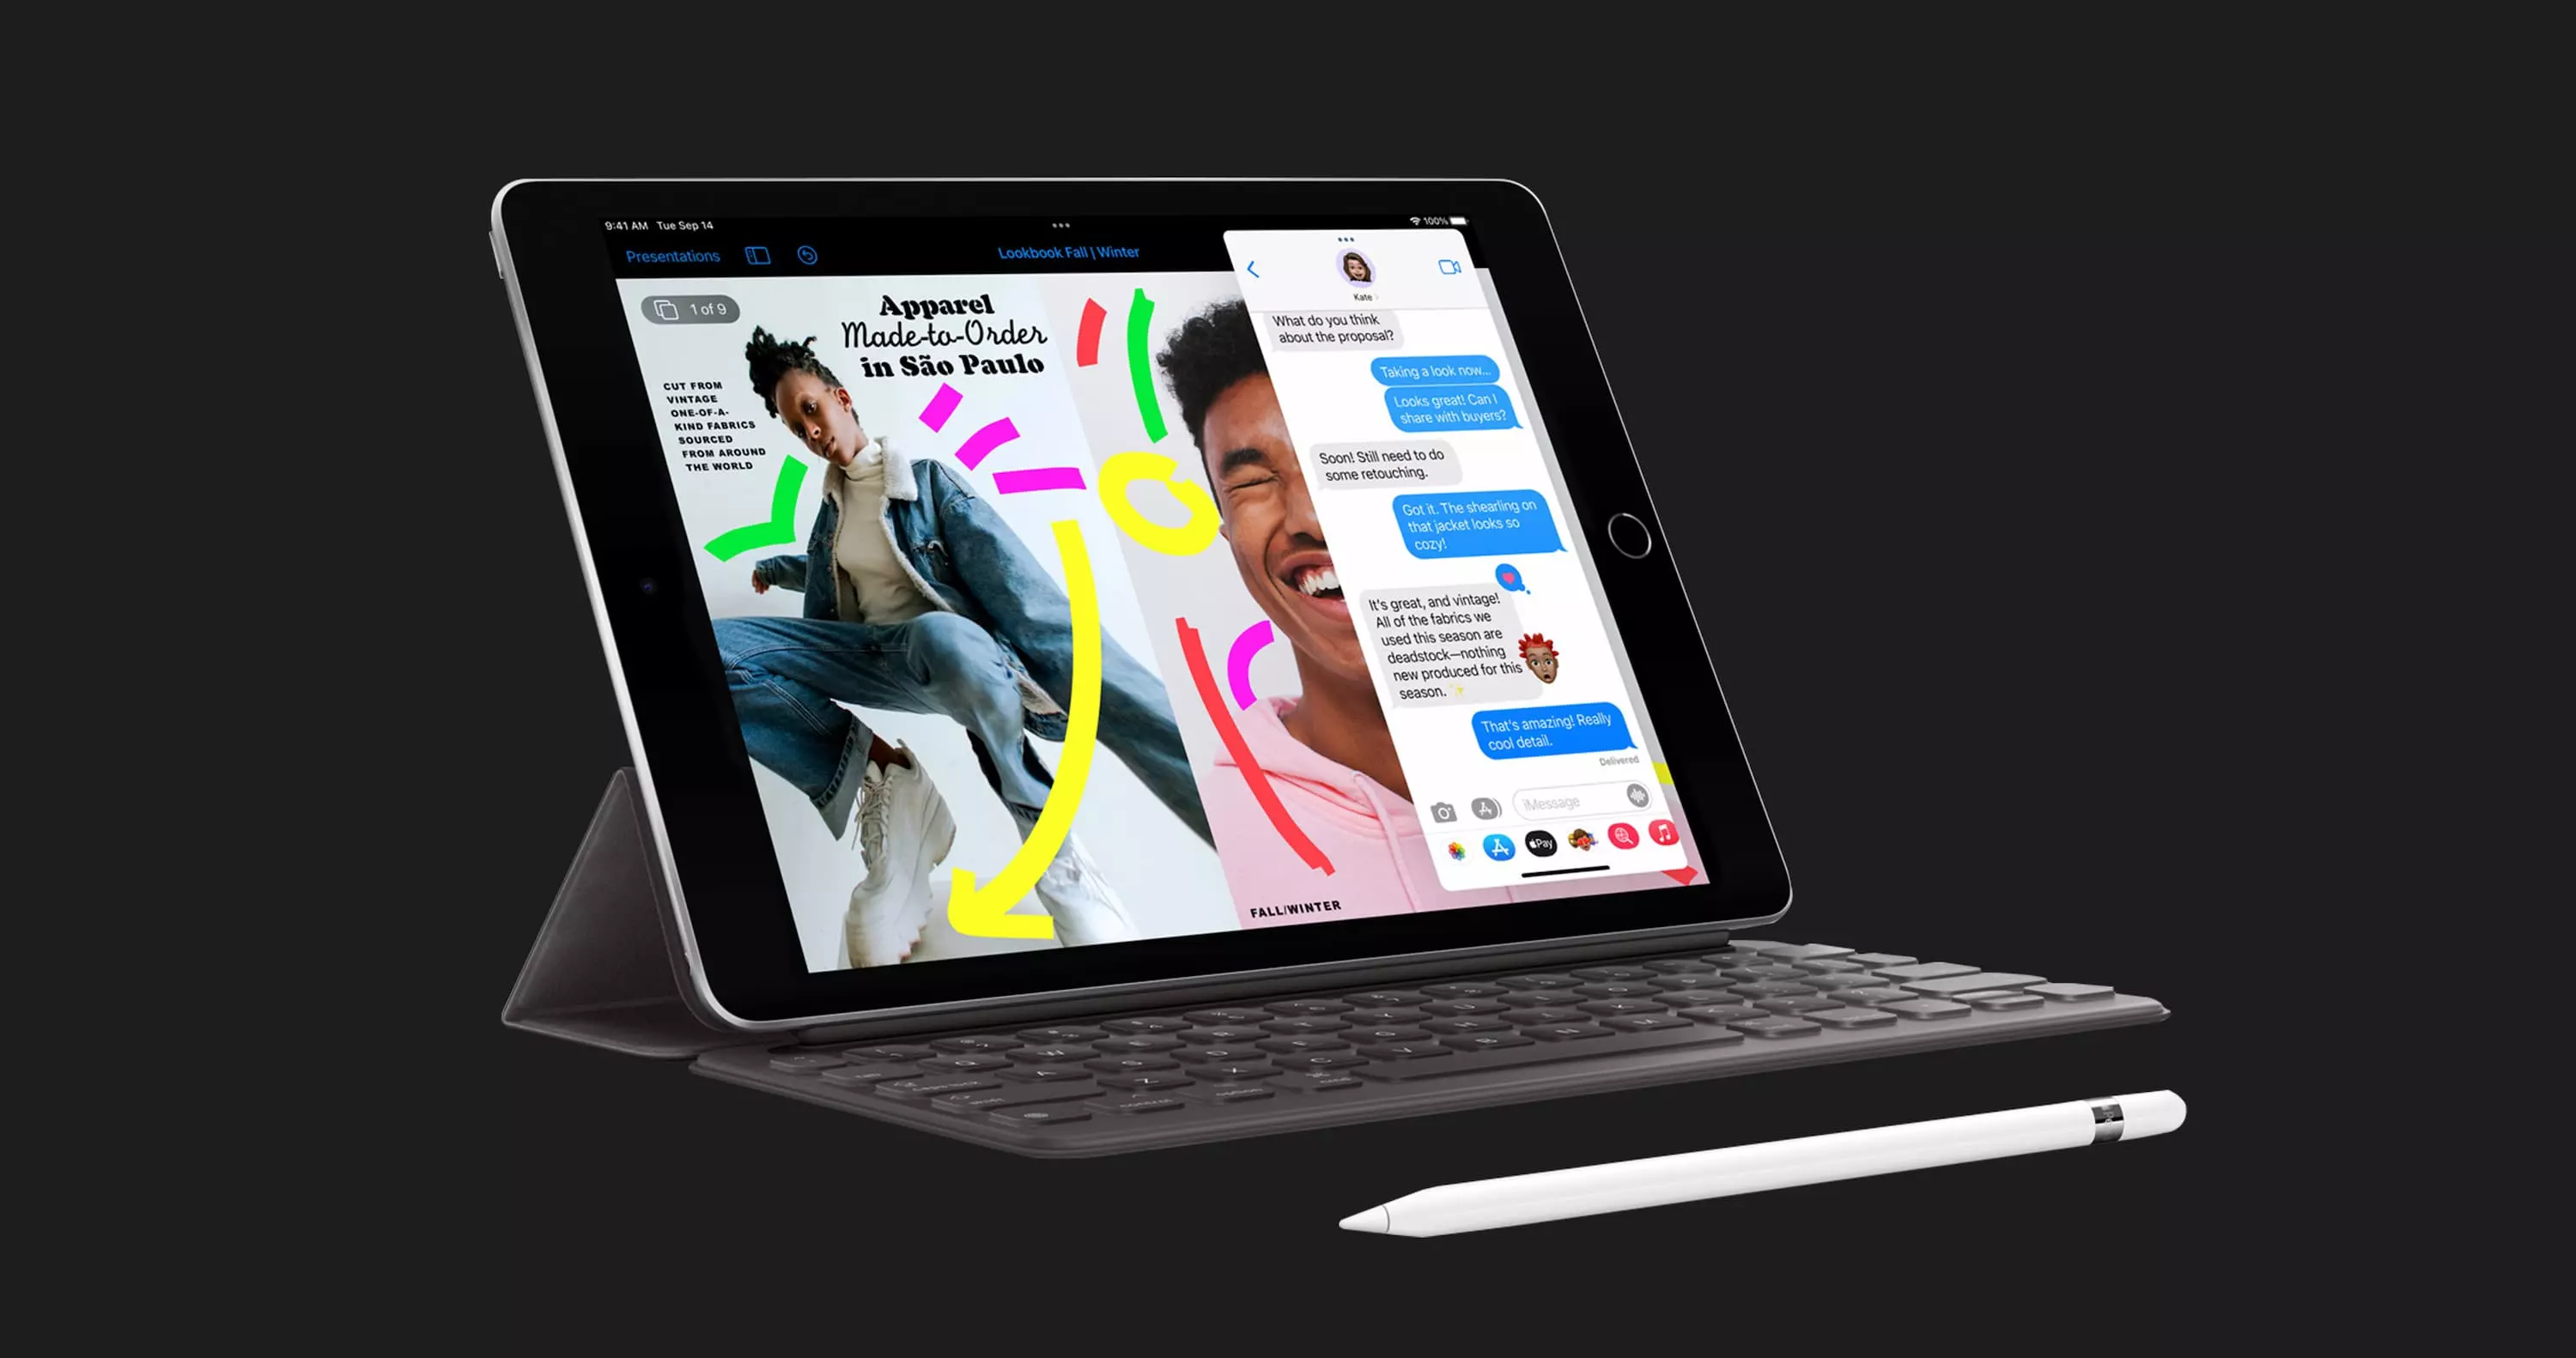 Планшет Apple iPad 10.2 64GB, Wi-Fi + LTE (Space Gray) 2021 (MK473)